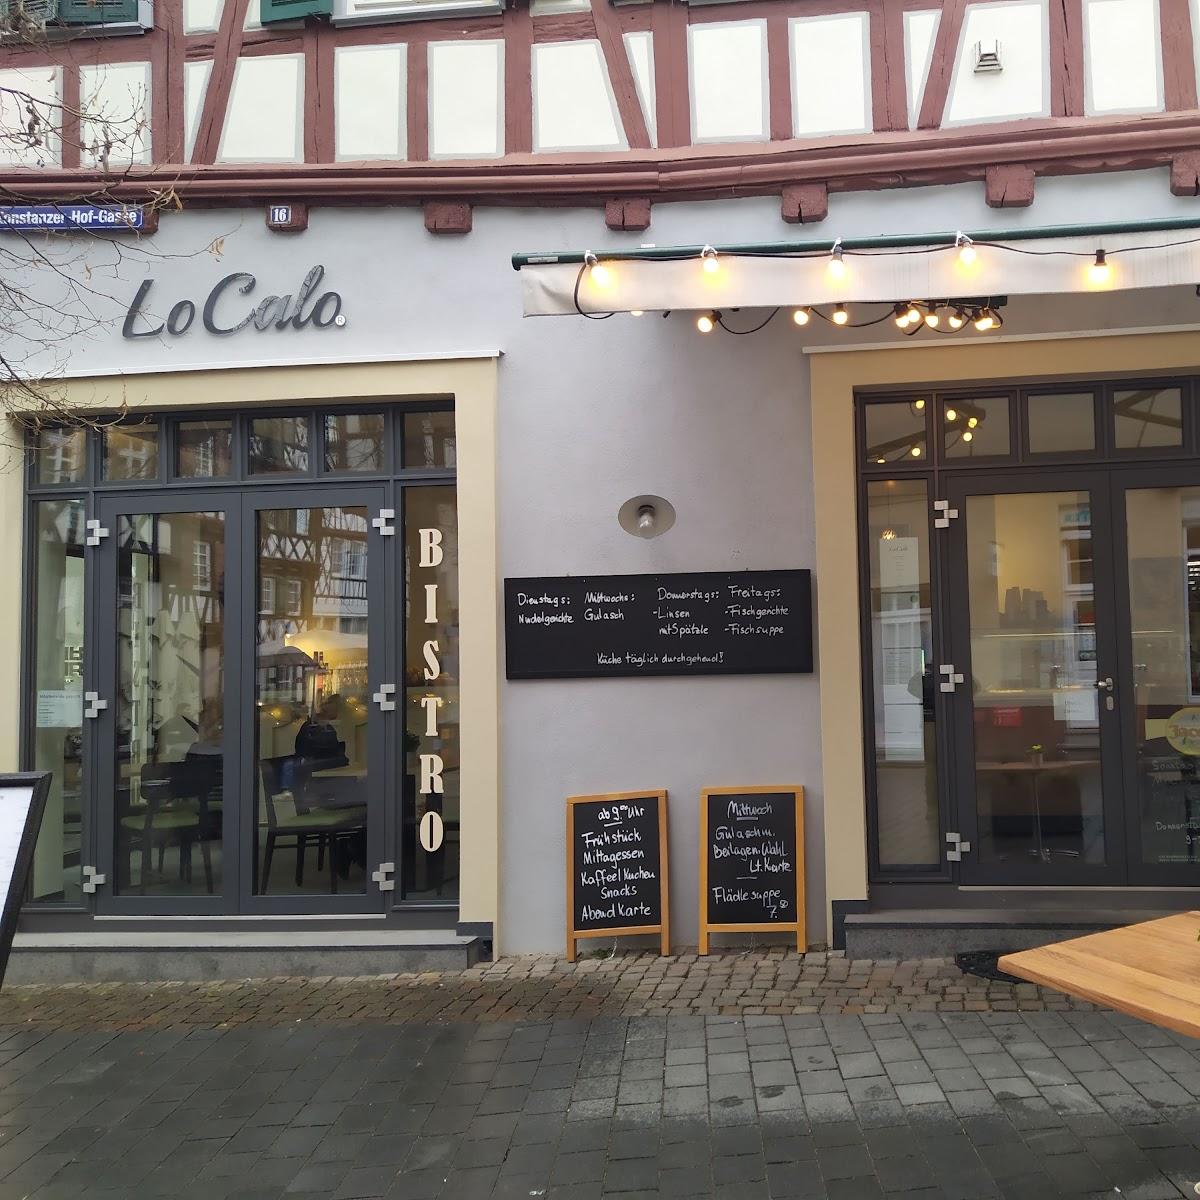 Restaurant "Lo Calo" in Schorndorf